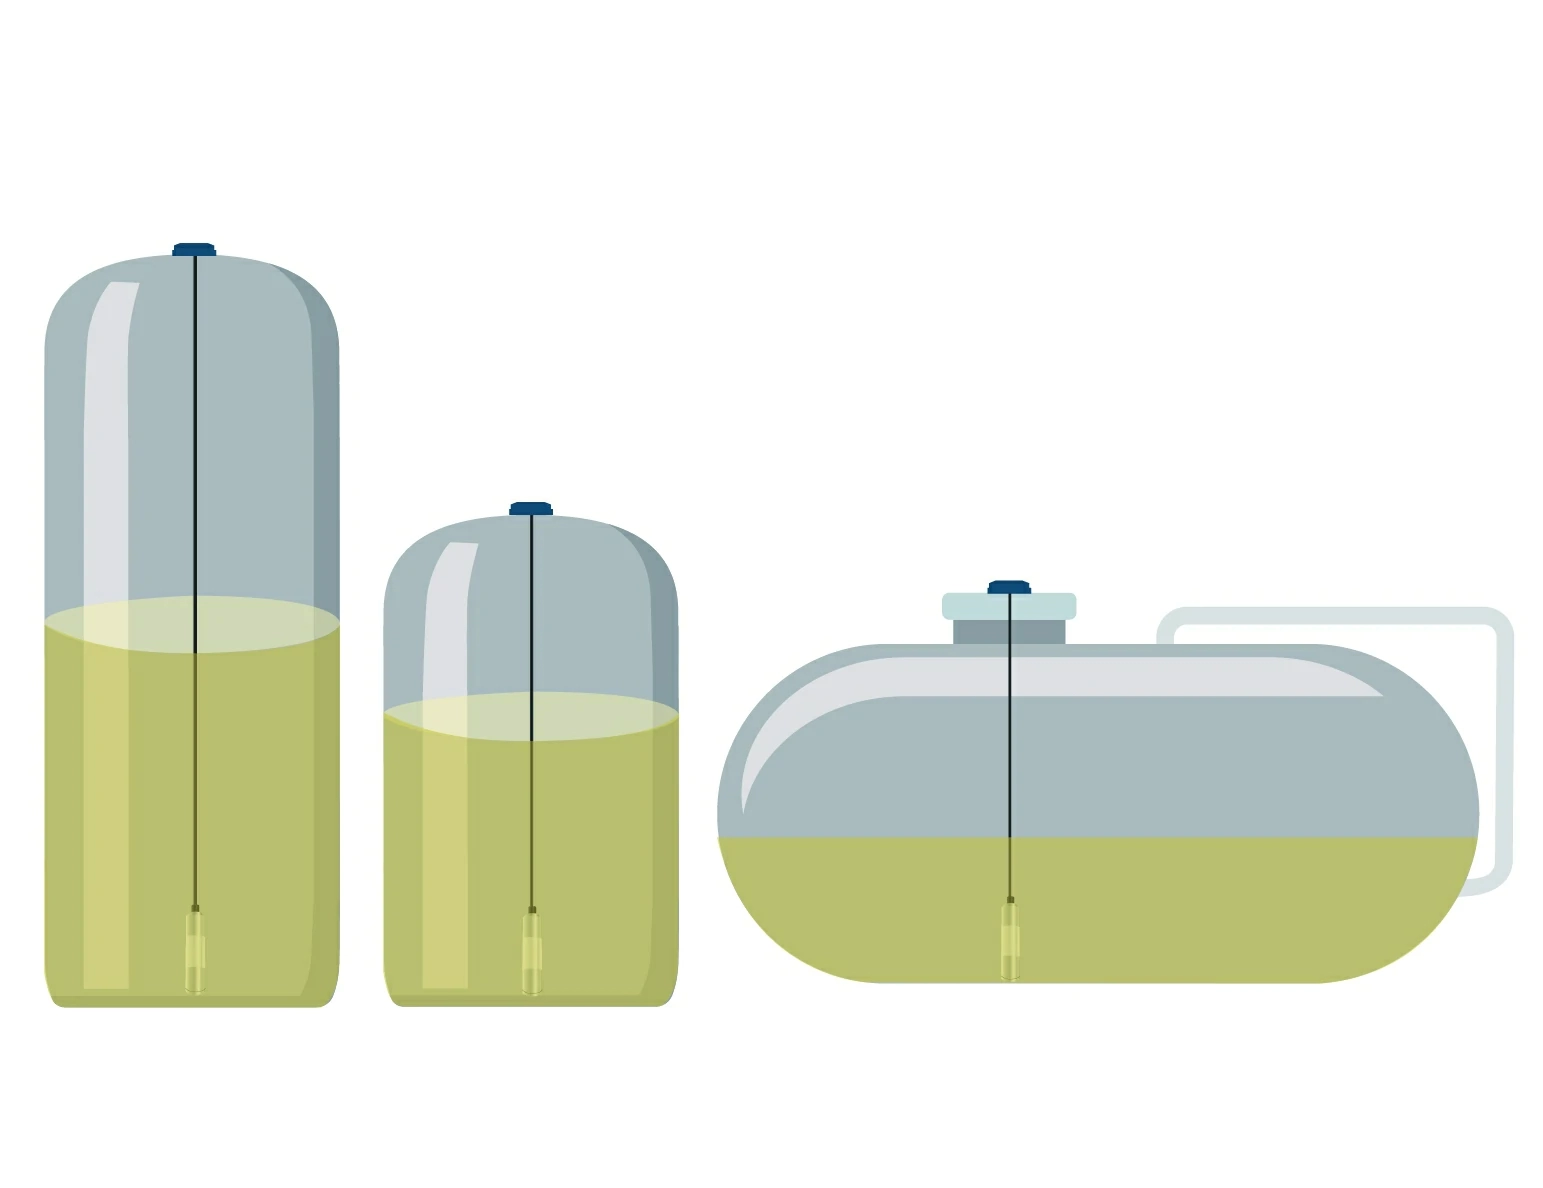 Finished Oill Tank Liquid Level Monitoring